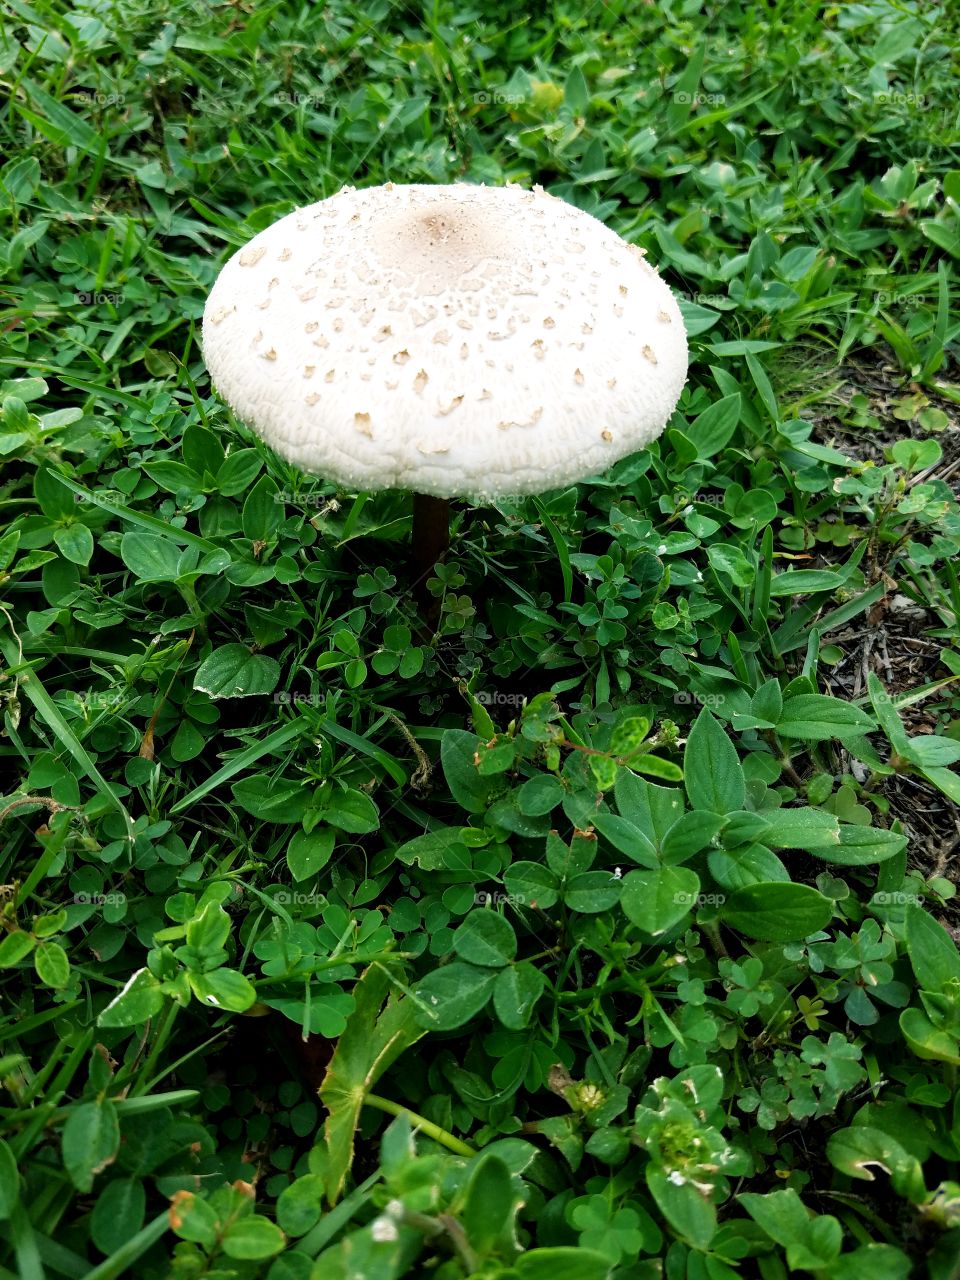 my ldeal of a perfect mushroom